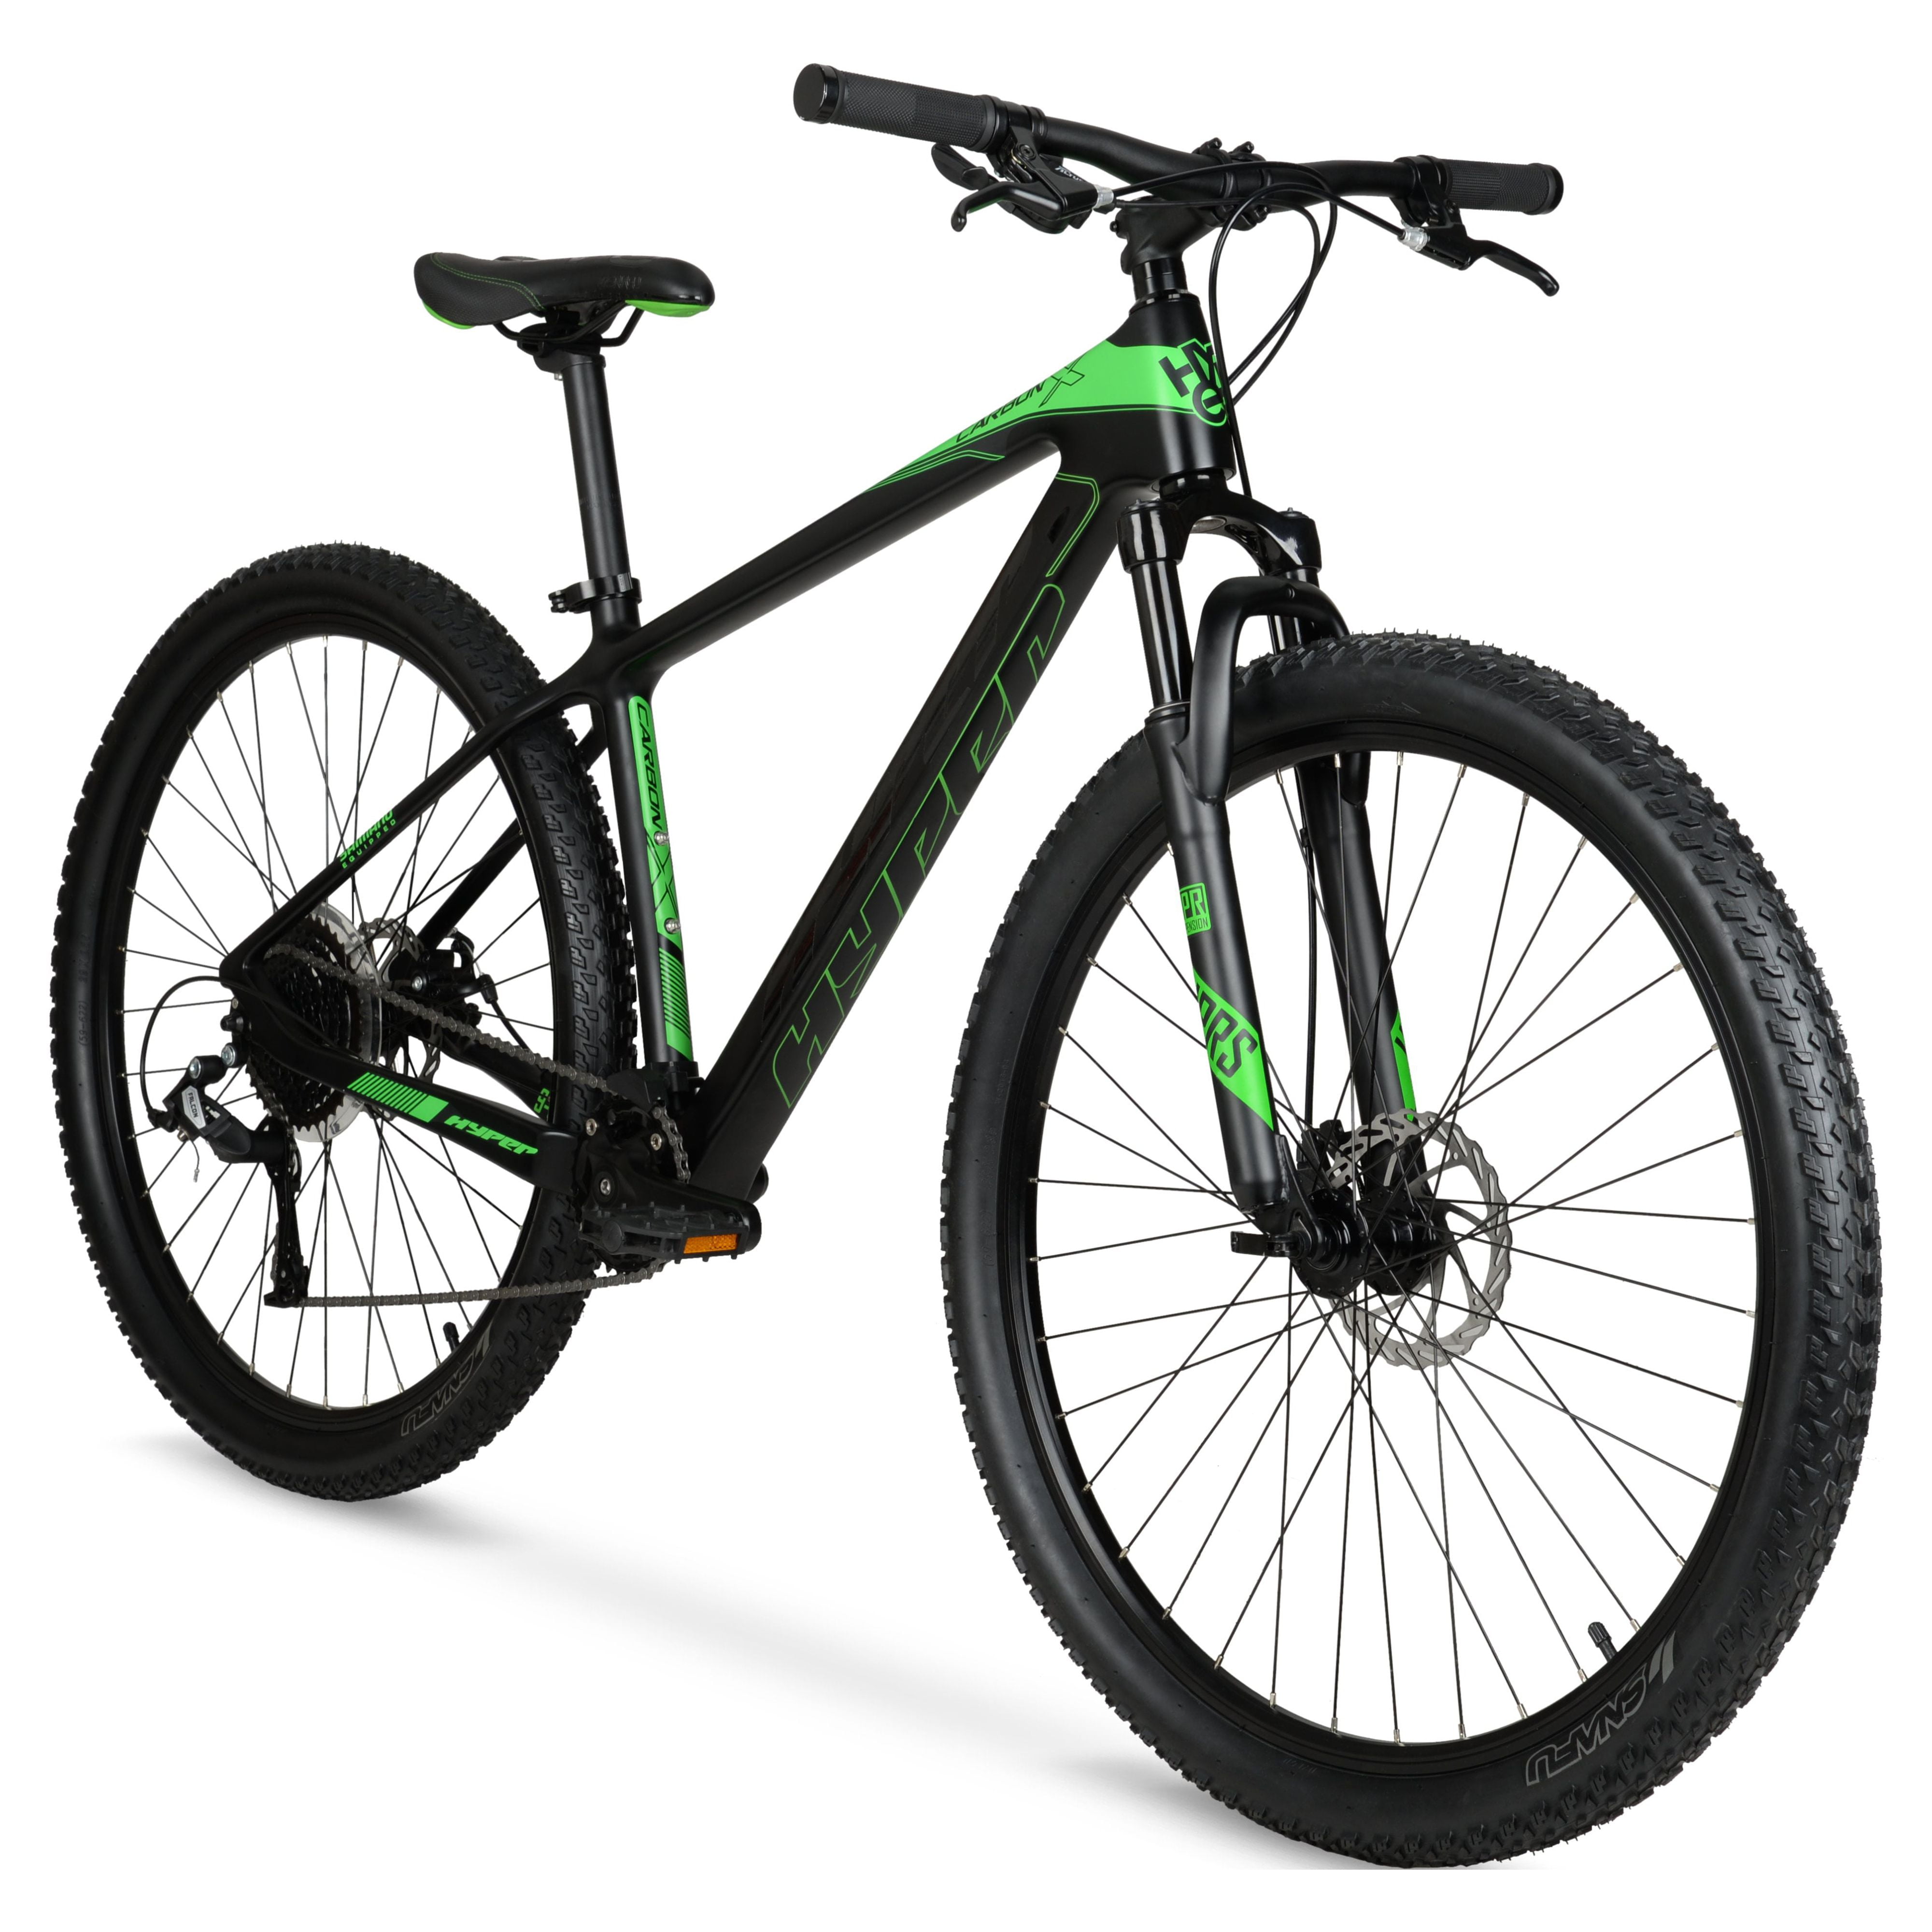 Hyper 29 Carbon Fiber Men's Mountain Bike, Black/Green 